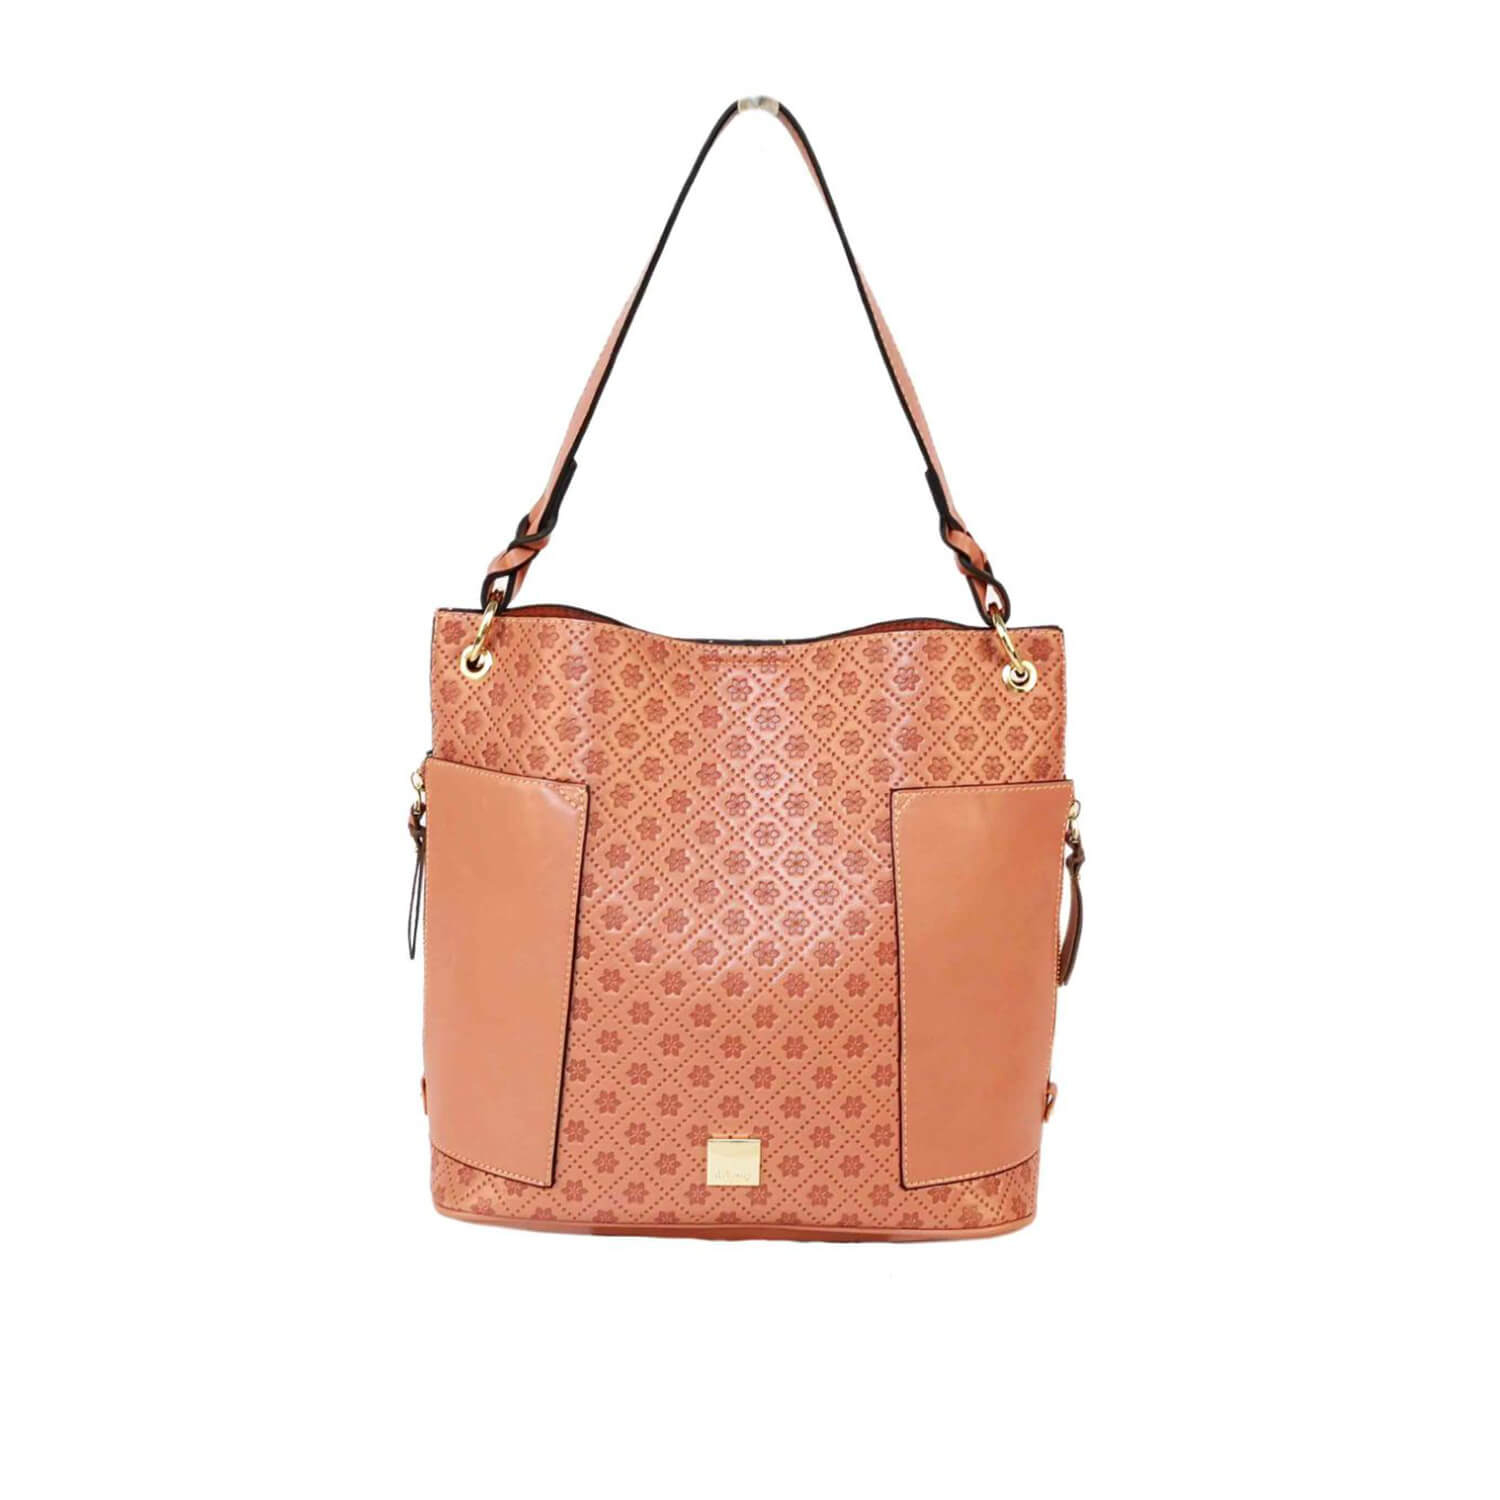 Gionni Valerian Embossed Hobo Handbag - Peach 1 Shaws Department Stores